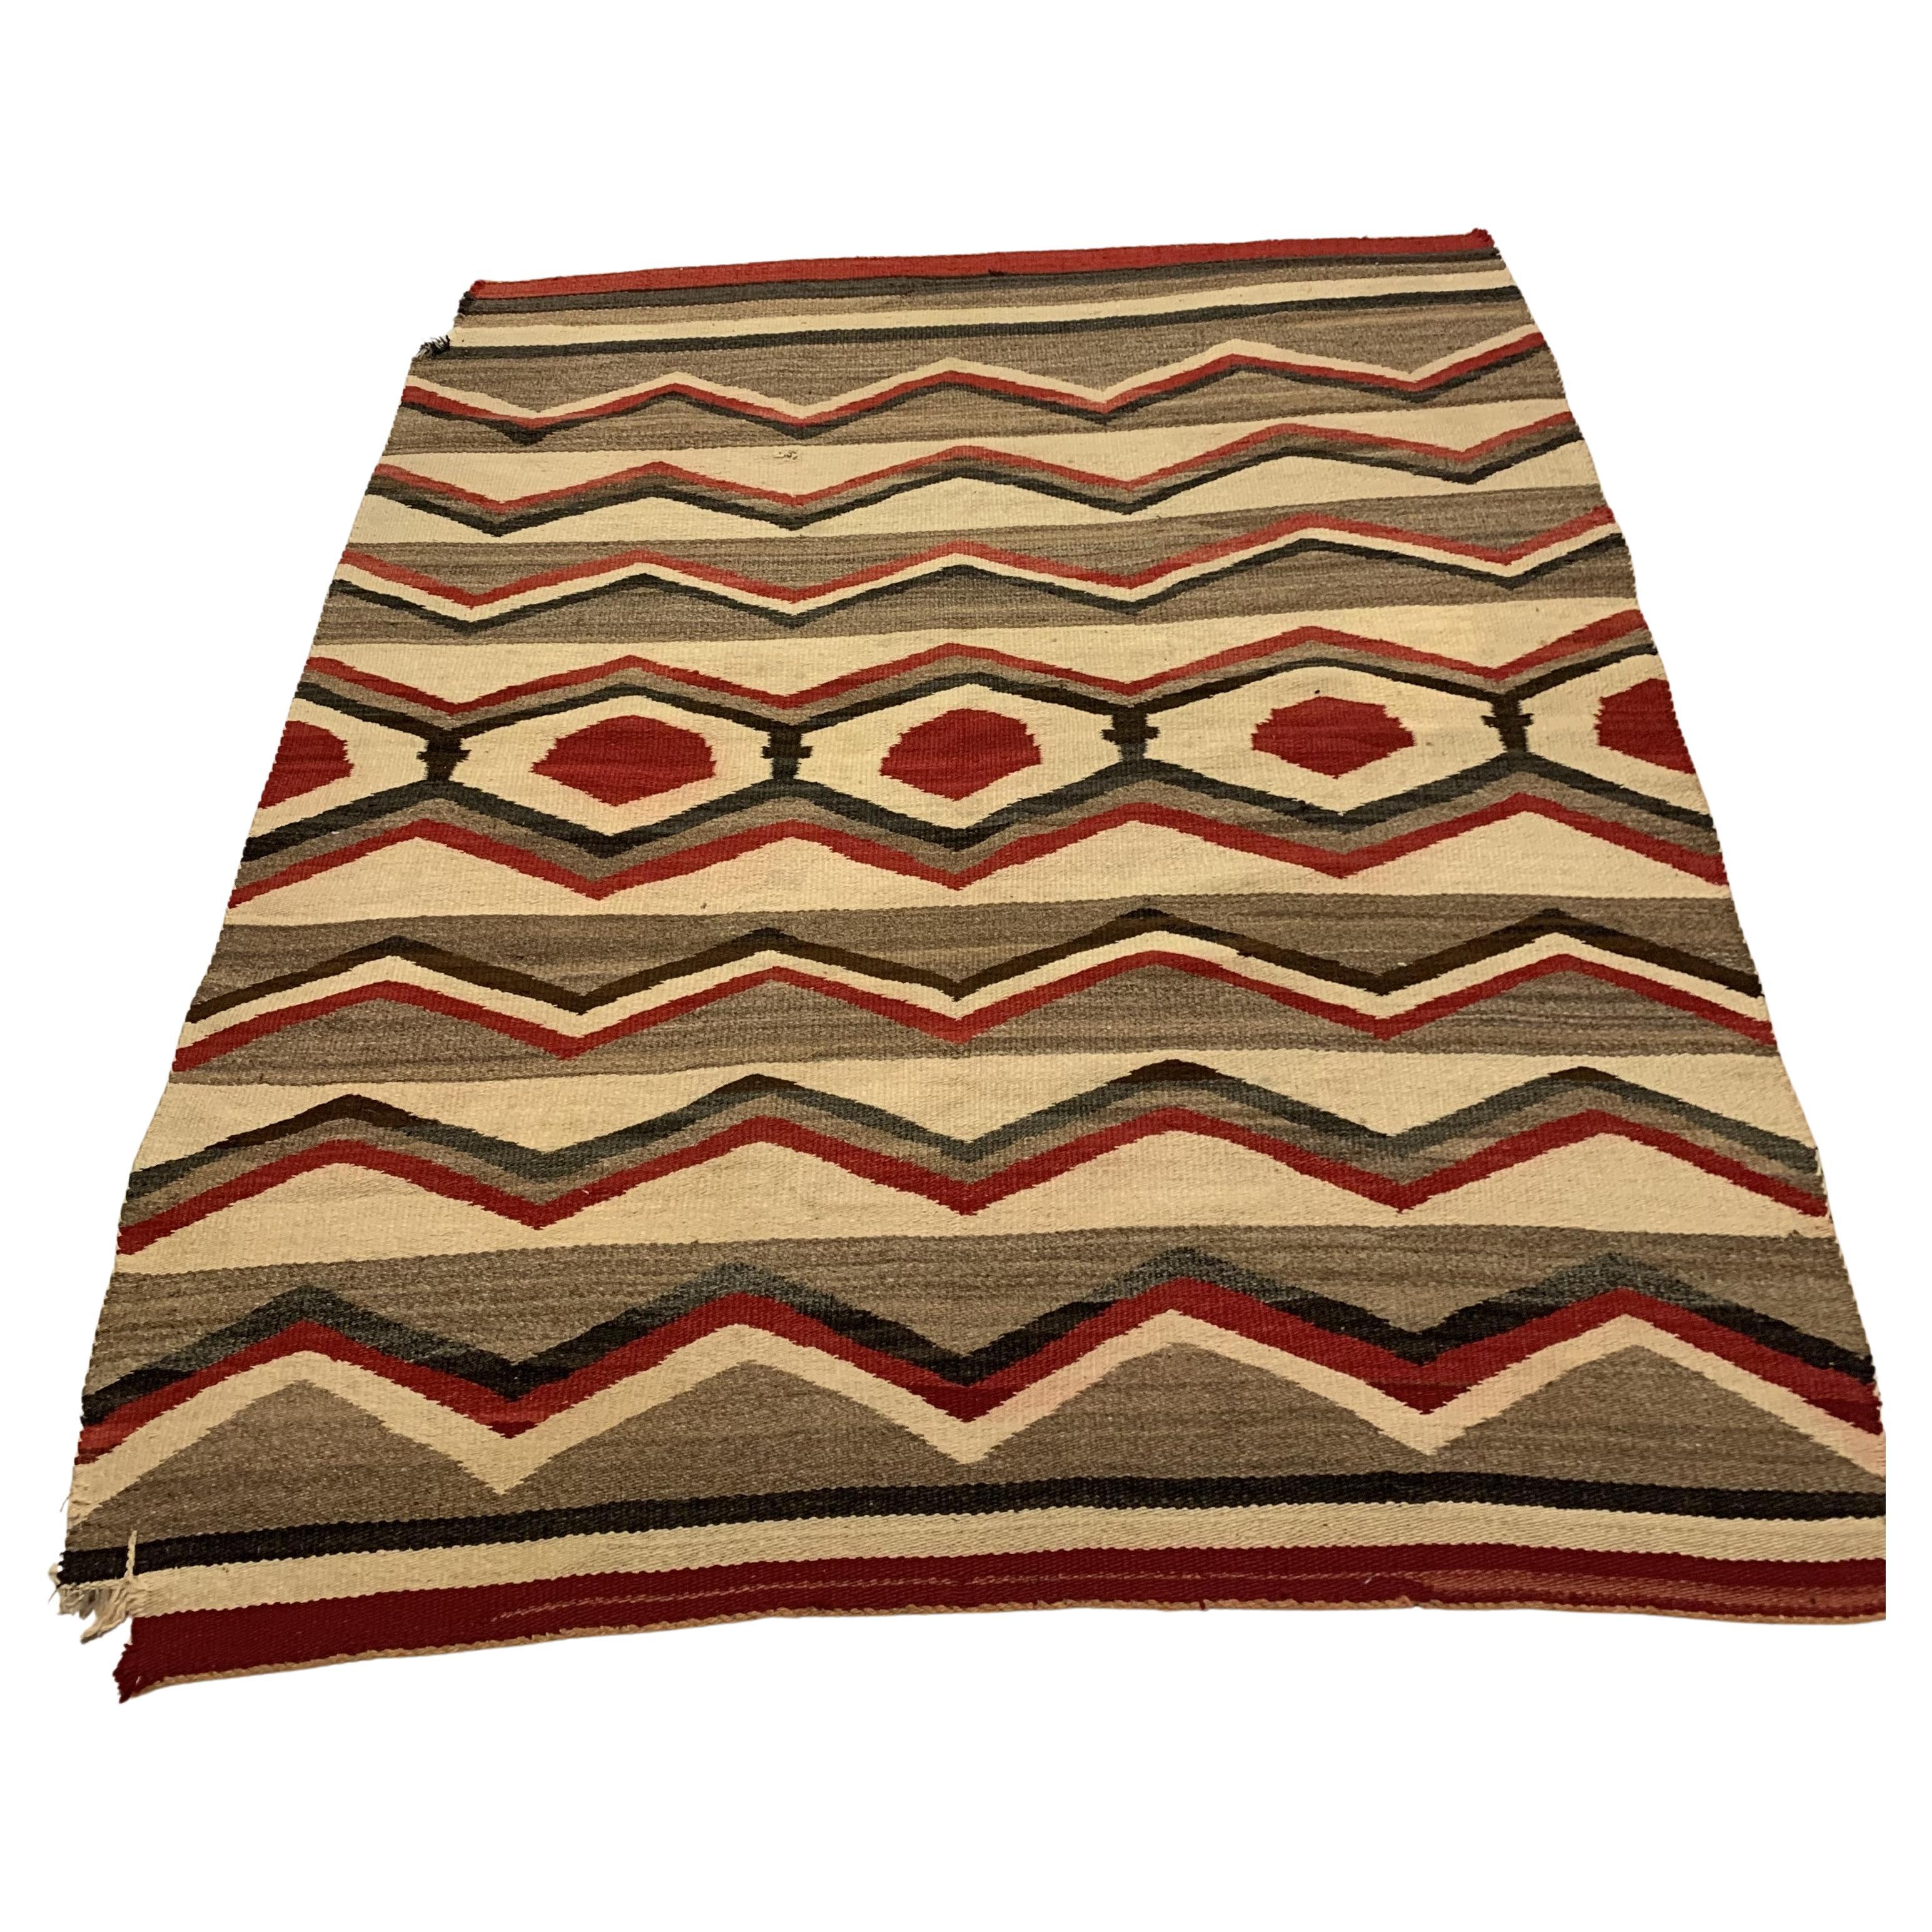 Handmade Antique Native American Navajo Rug Blanket 4.6' x 5.4', 1900s - 2B22